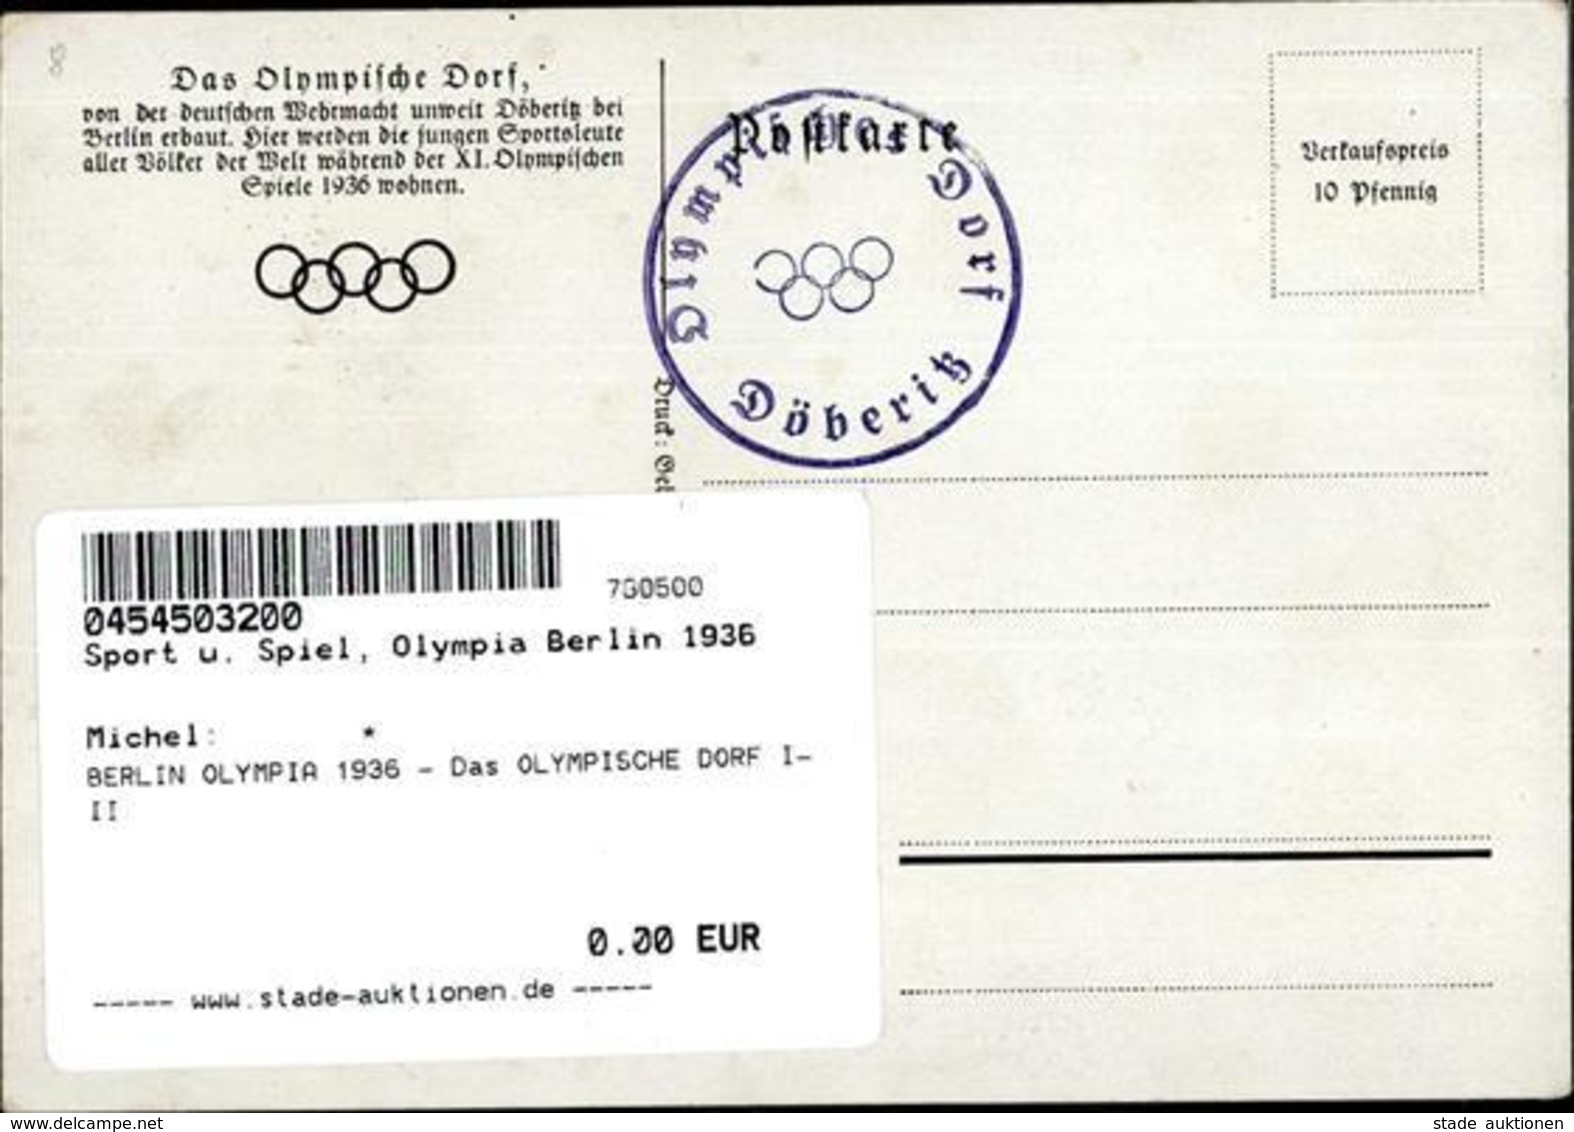 BERLIN OLYMPIA 1936 - Das OLYMPISCHE DORF I-II - Olympic Games